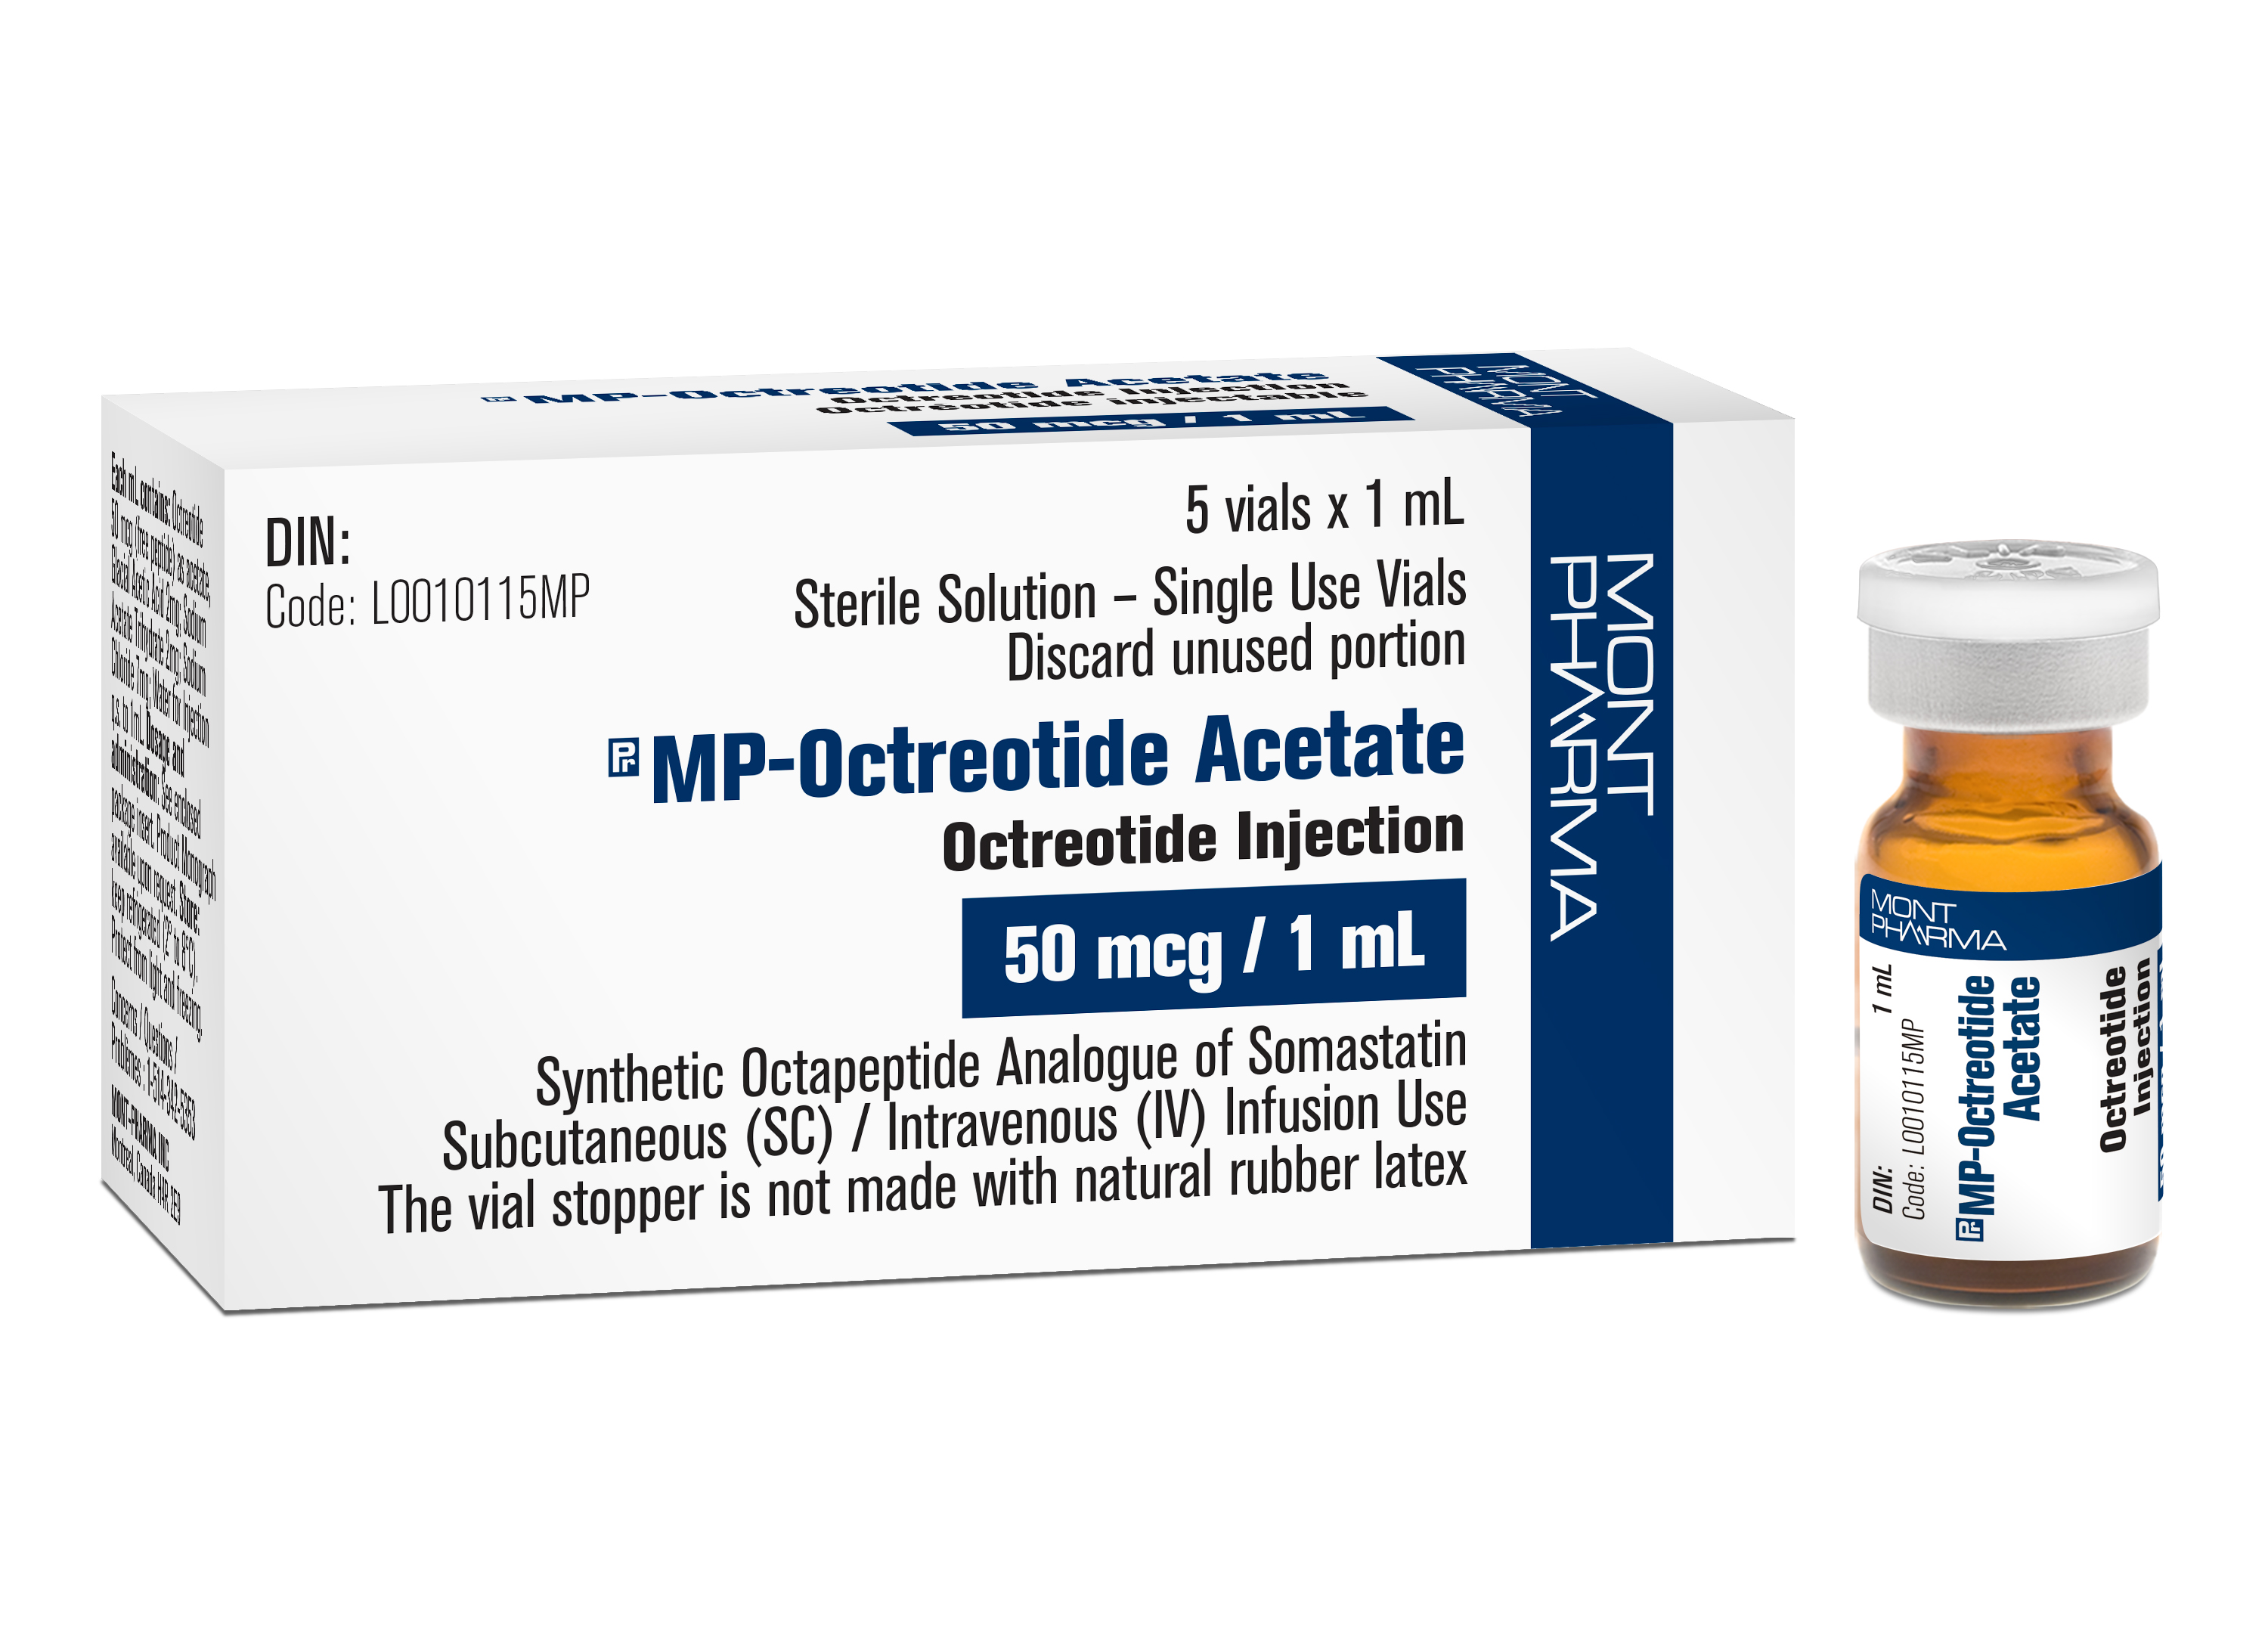 Mp-octreotide acetate injection 50 mcg/mL